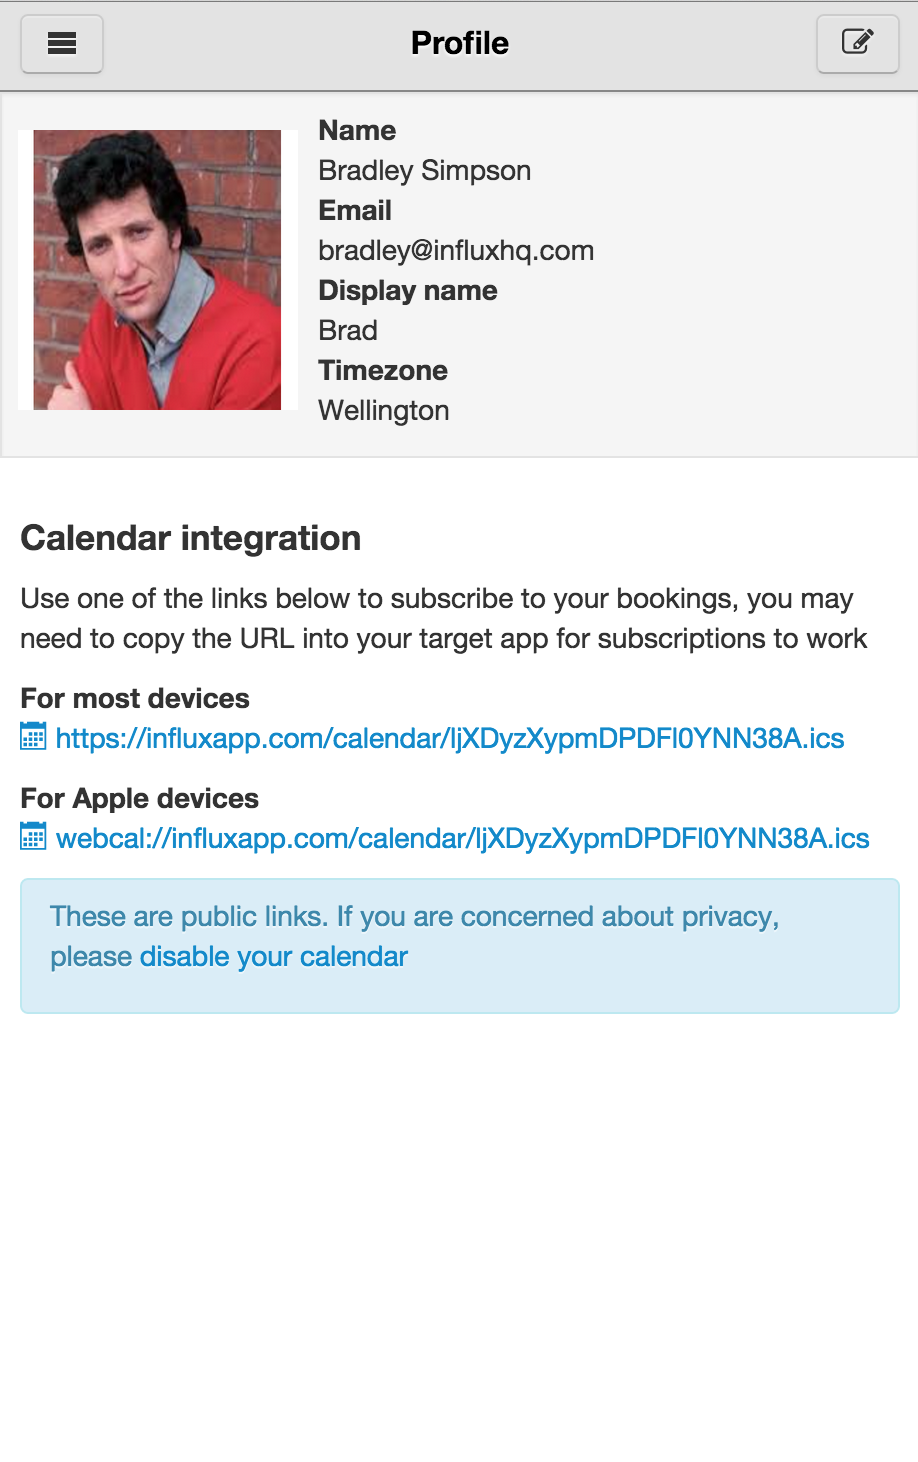 InfluxApp showing iCal calendar integration optoins